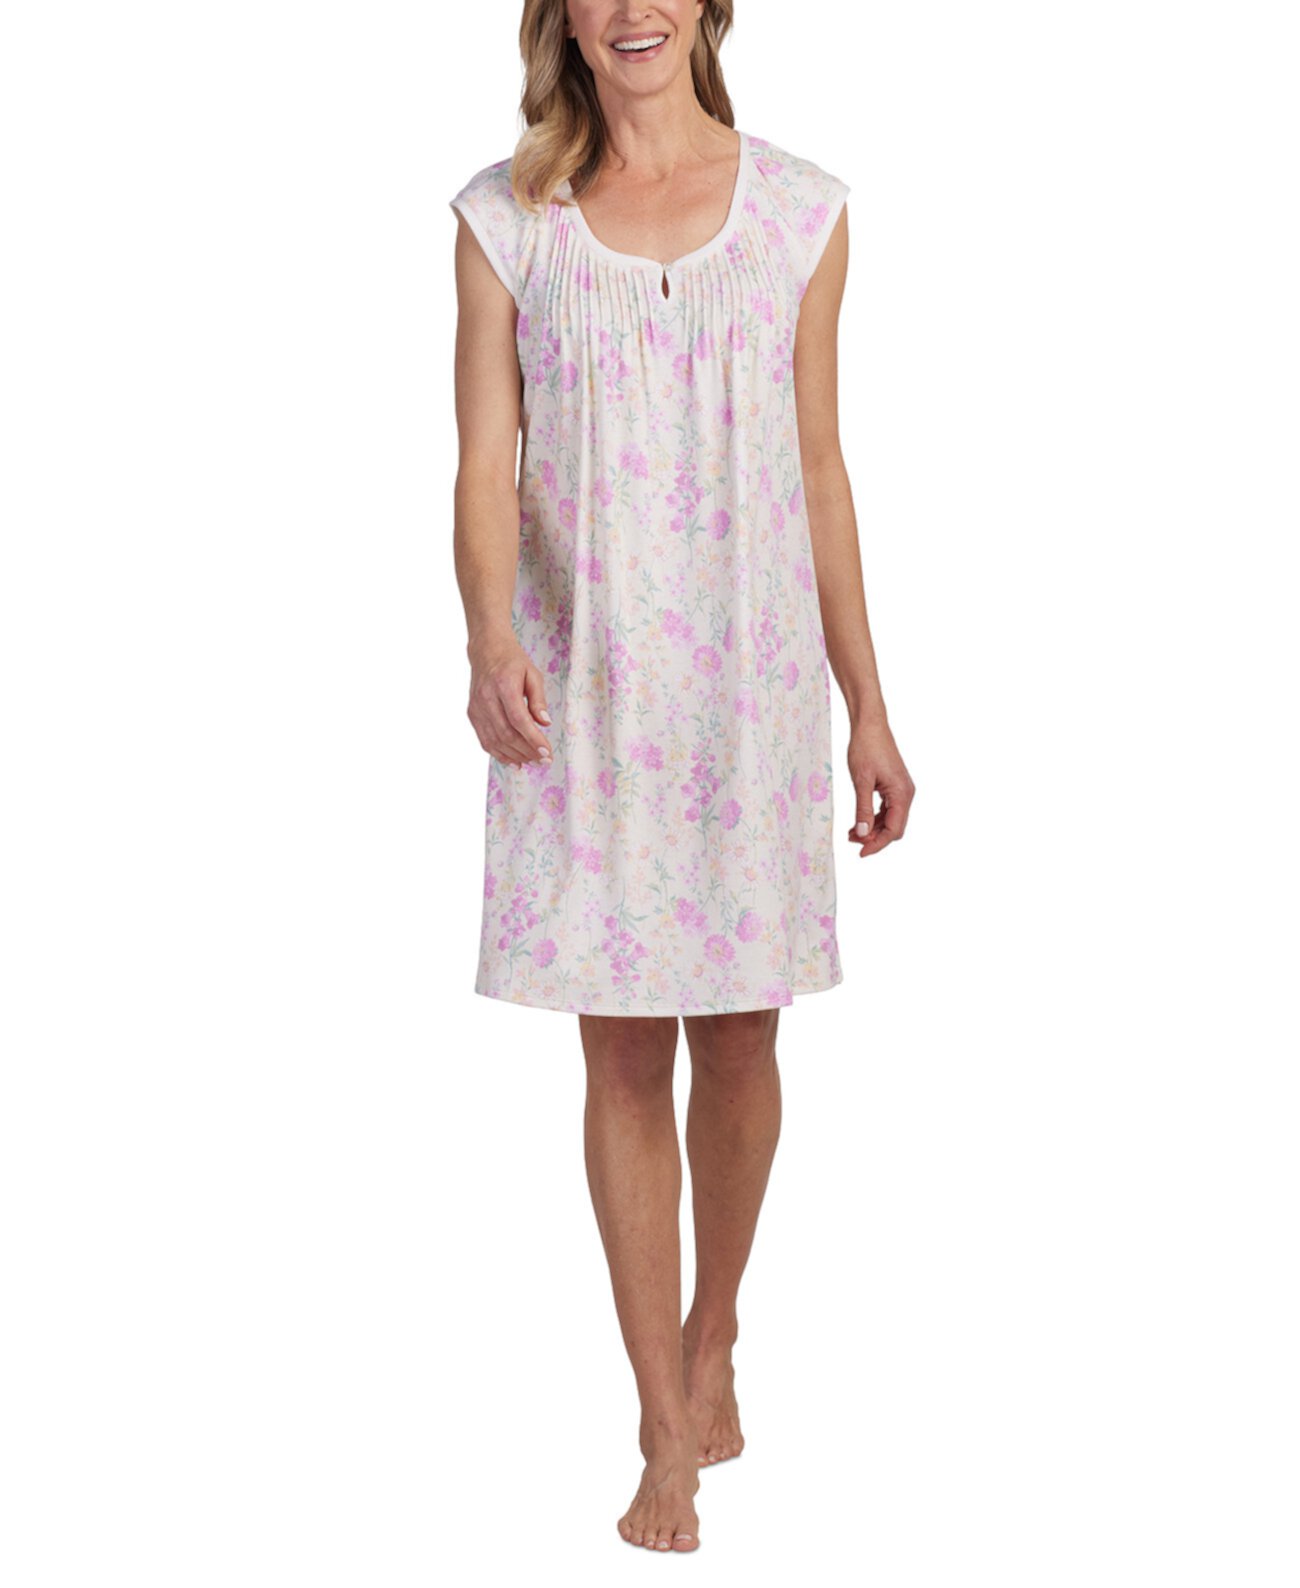 Women's Sleeveless Floral Nightgown Miss Elaine